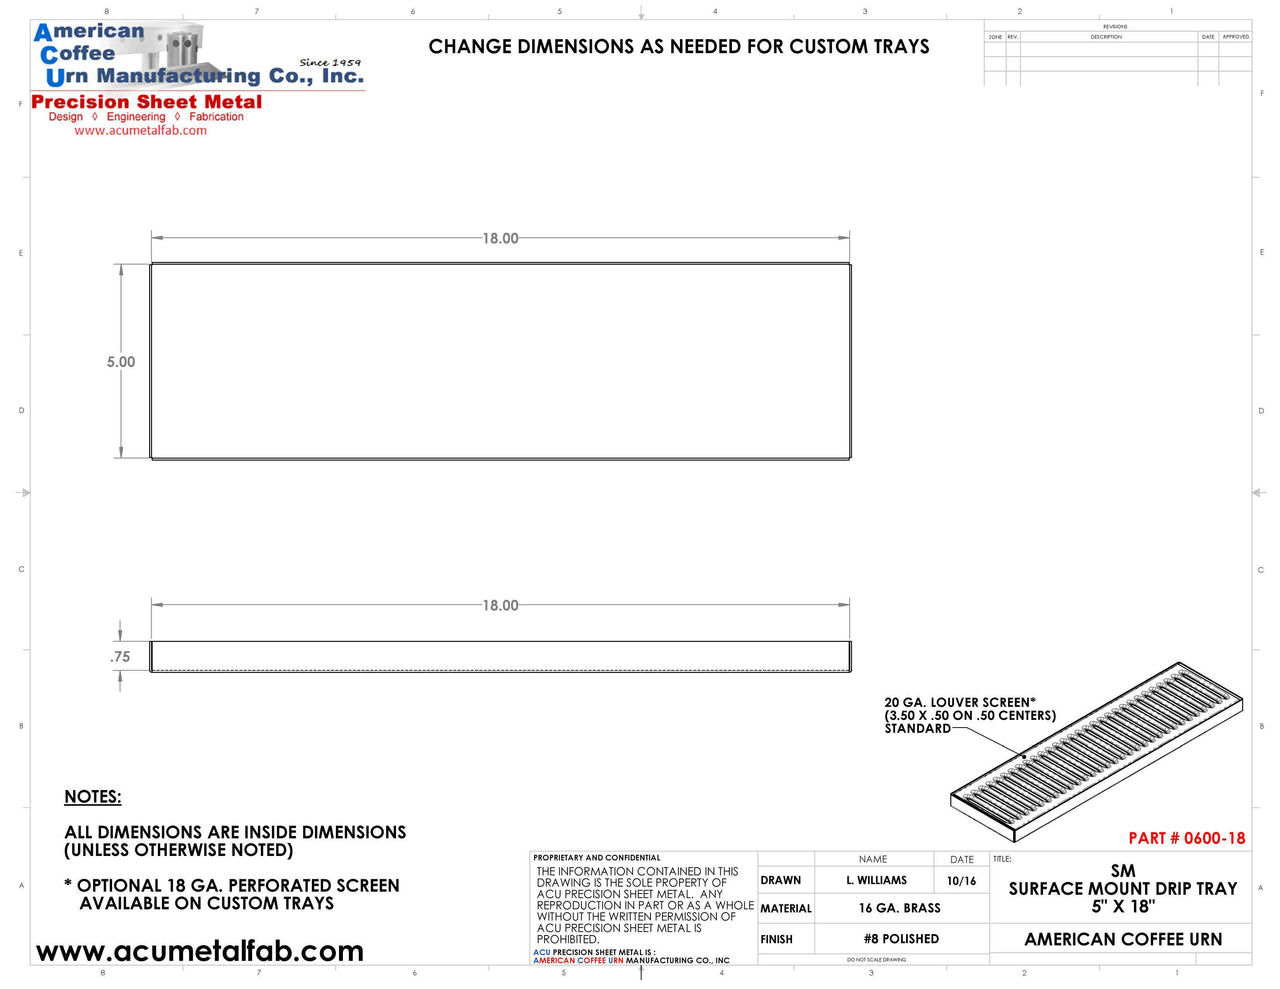 5" X 18" X 3/4" Surface Mount Drip Tray | No Drain | Brass - ACU Precision Sheet Metal